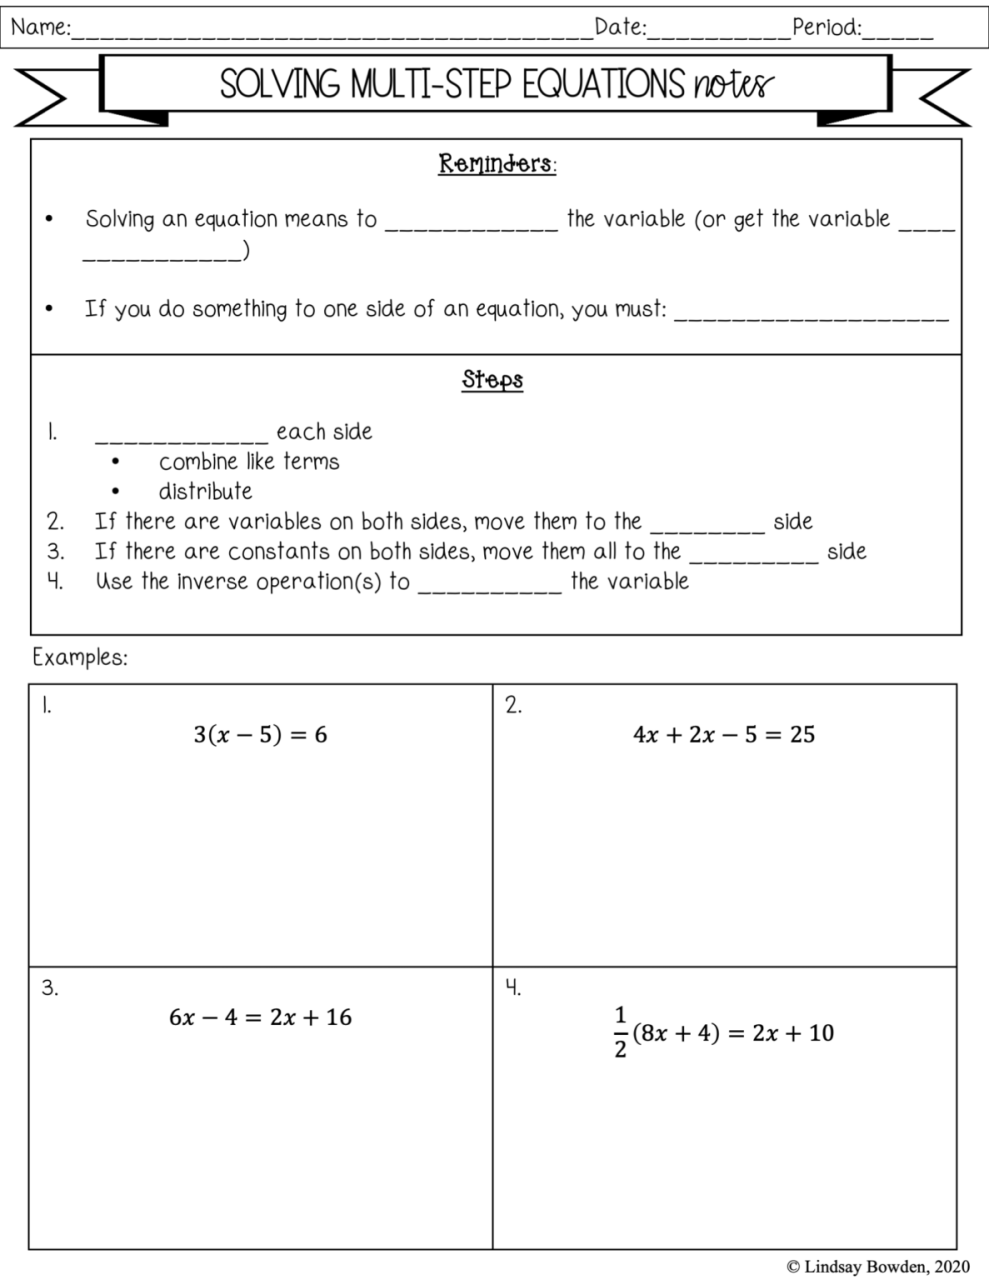 MultiStep Equation Notes and Worksheets Lindsay Bowden